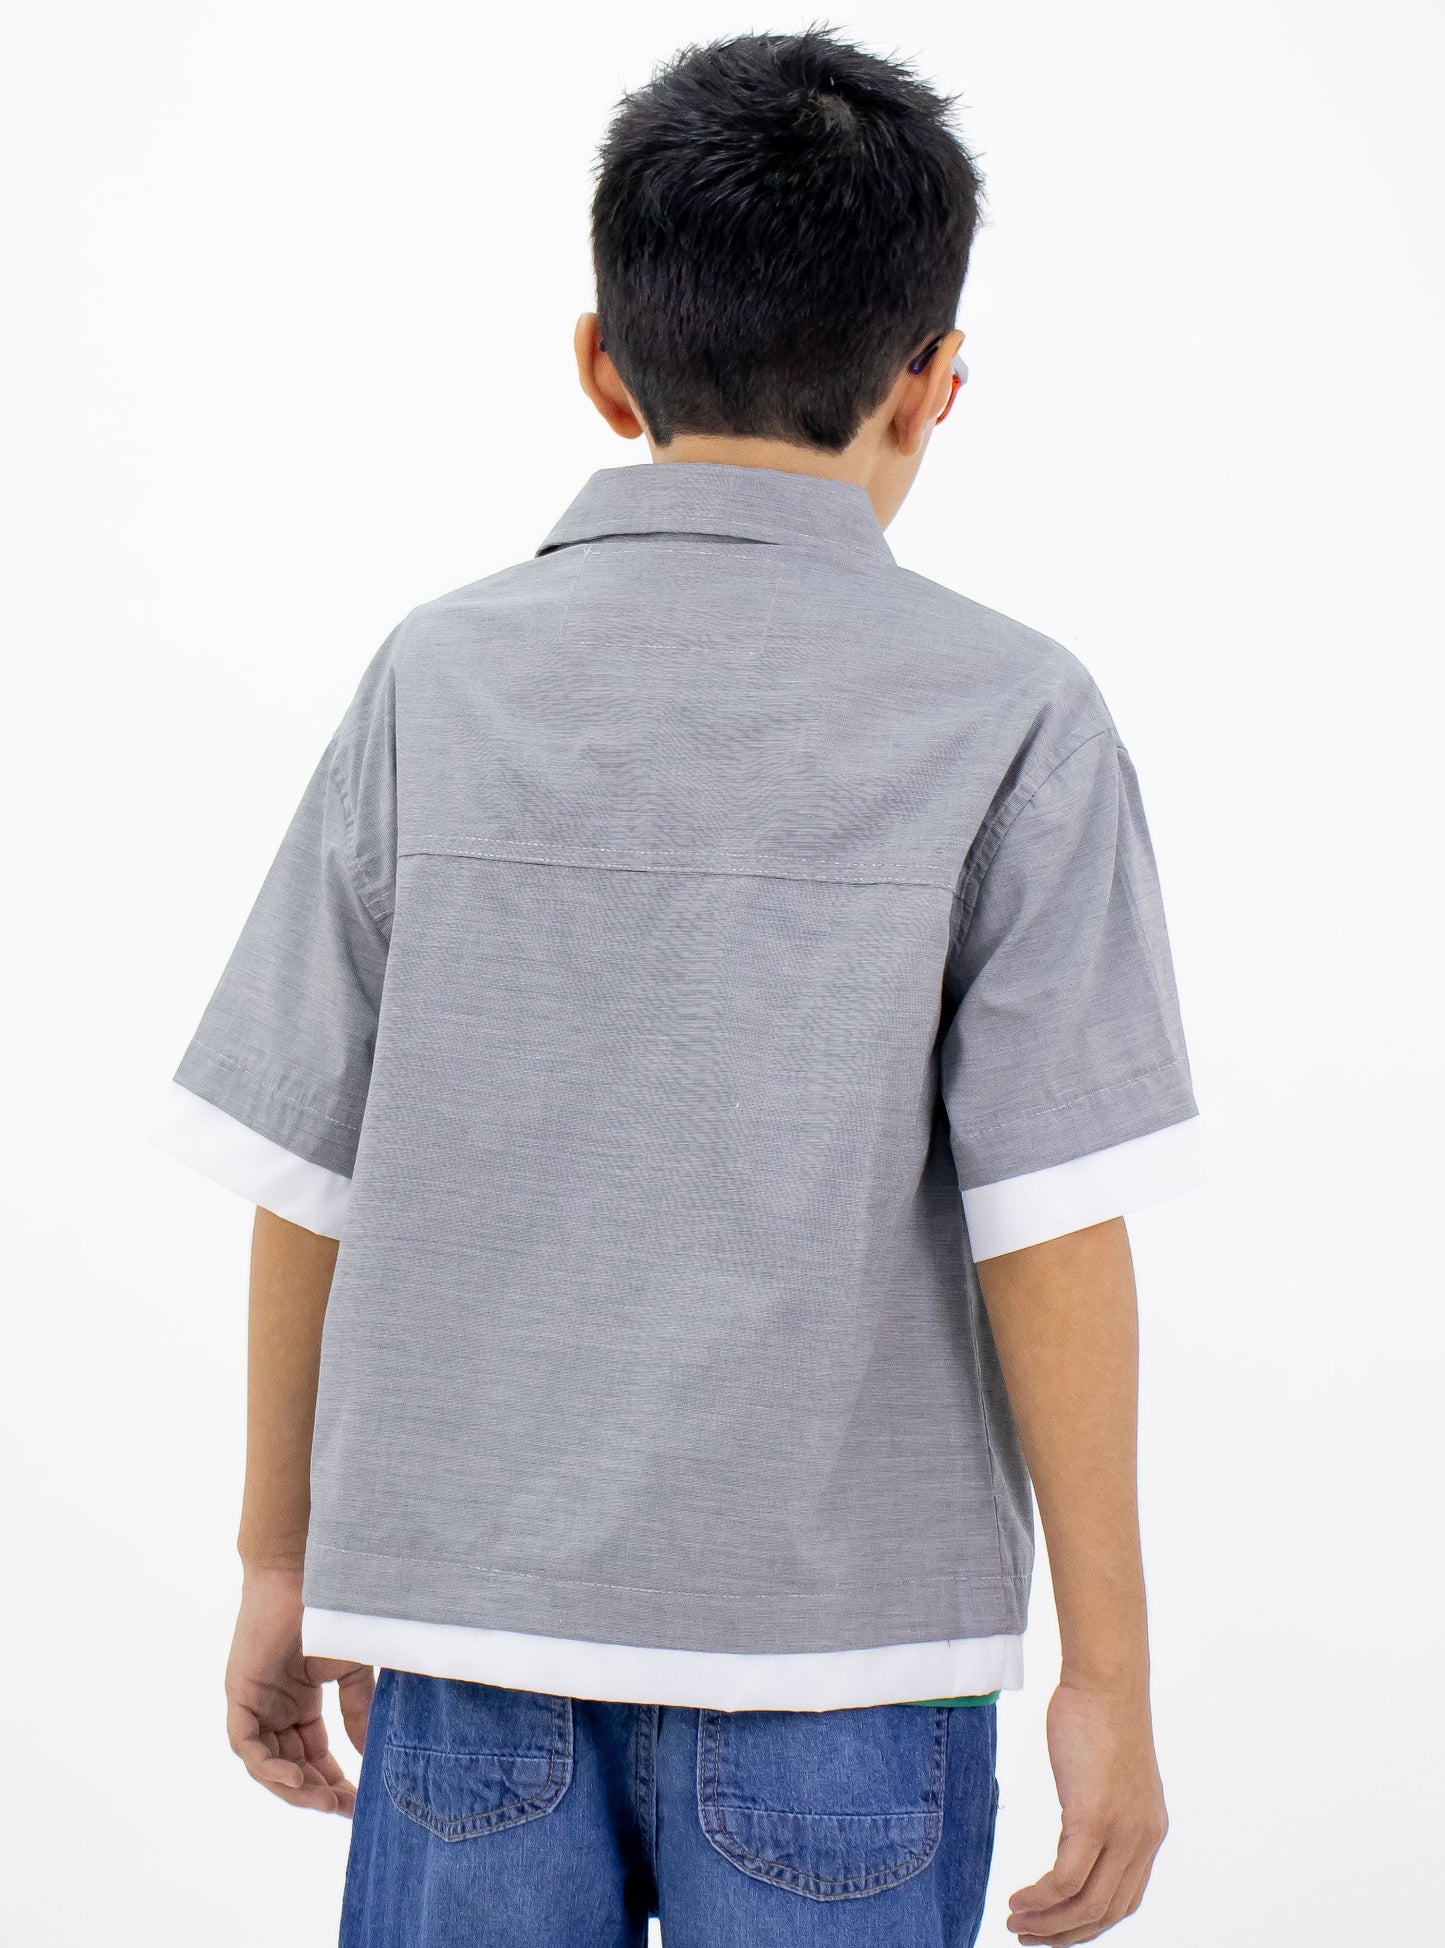 Camisa manga corta de color gris